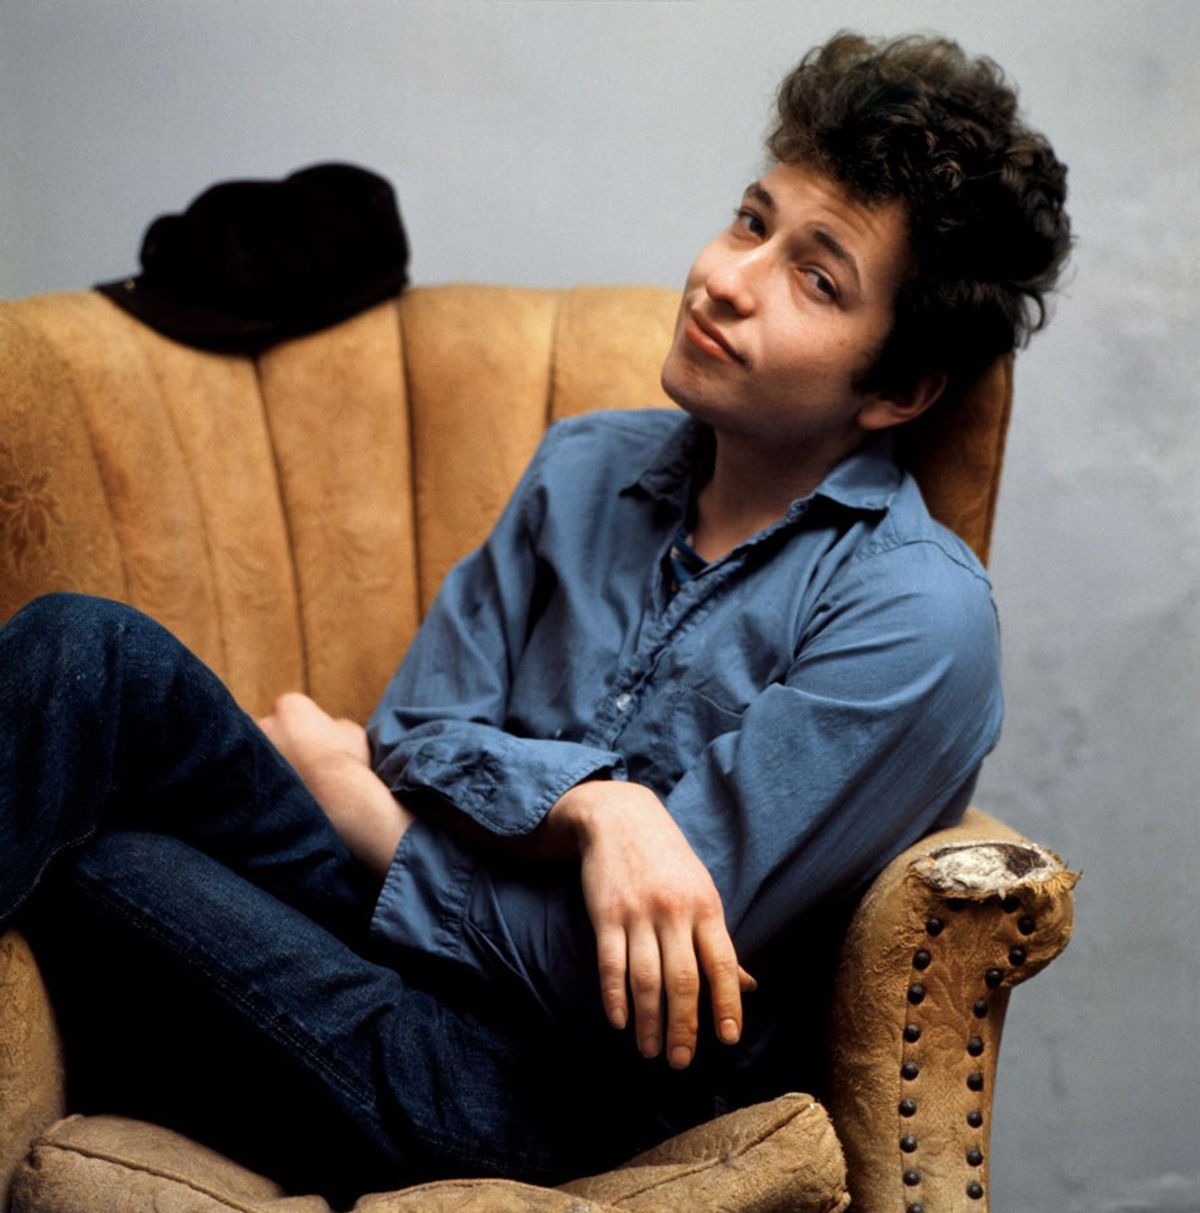 Bob Dylan: A Lyricist and a Poet